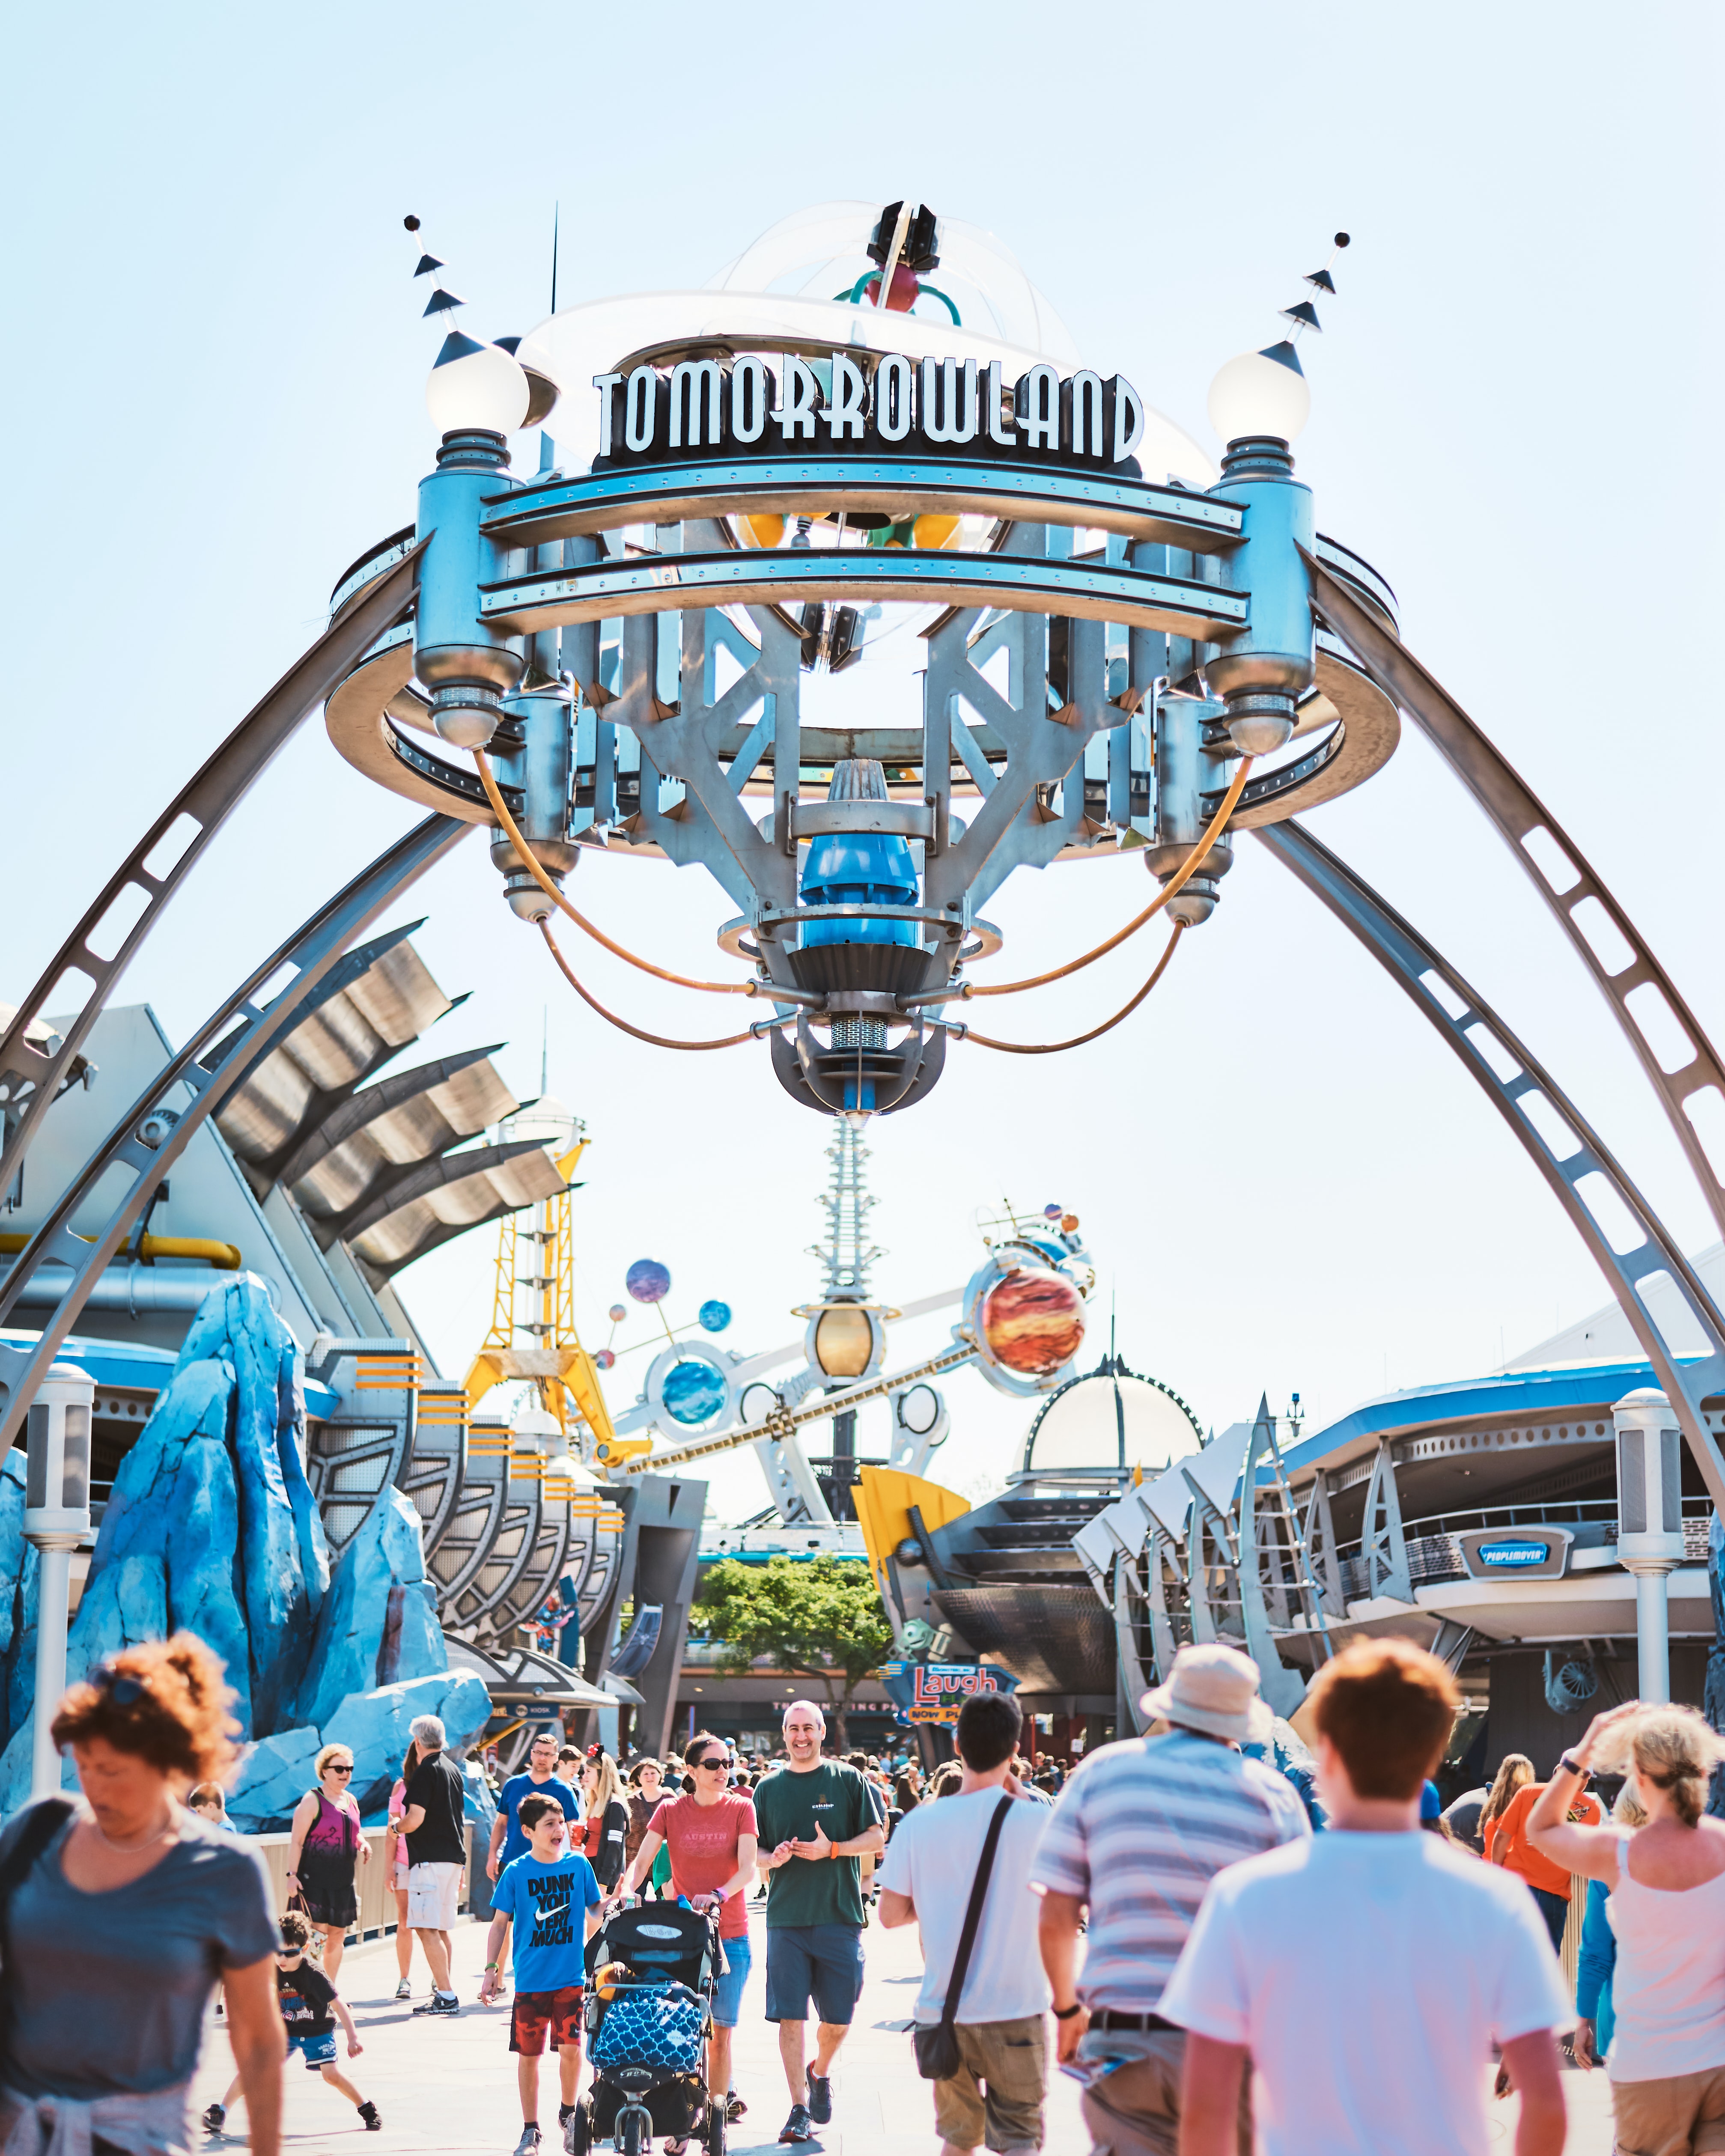 People walking in Tomorrowland at Magic Kingdom in Walt Disney World